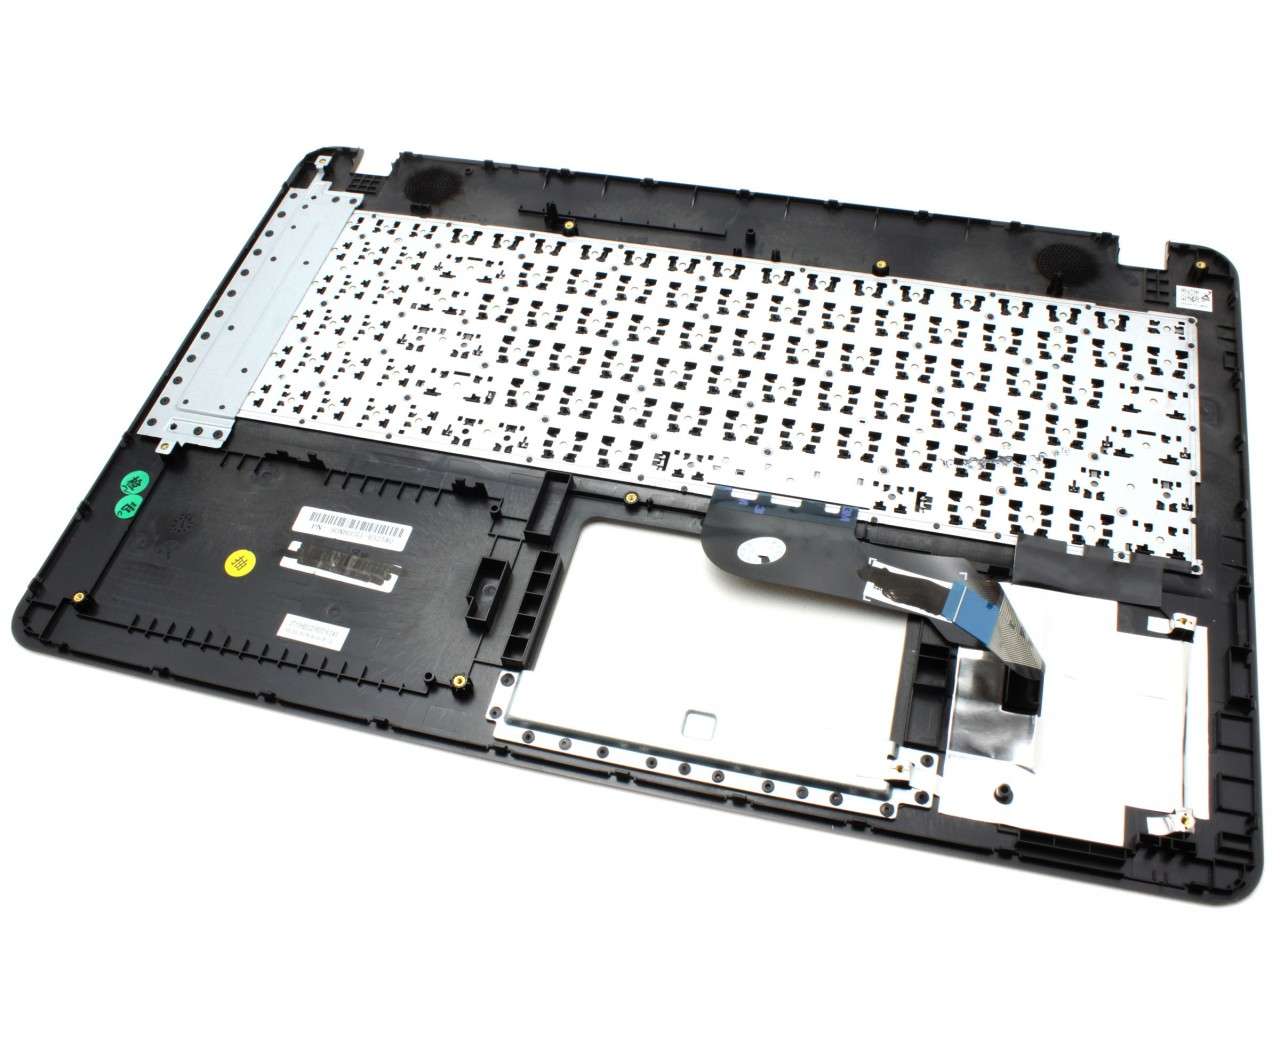 Tastatura Asus R541NA Neagra cu Palmrest Auriu